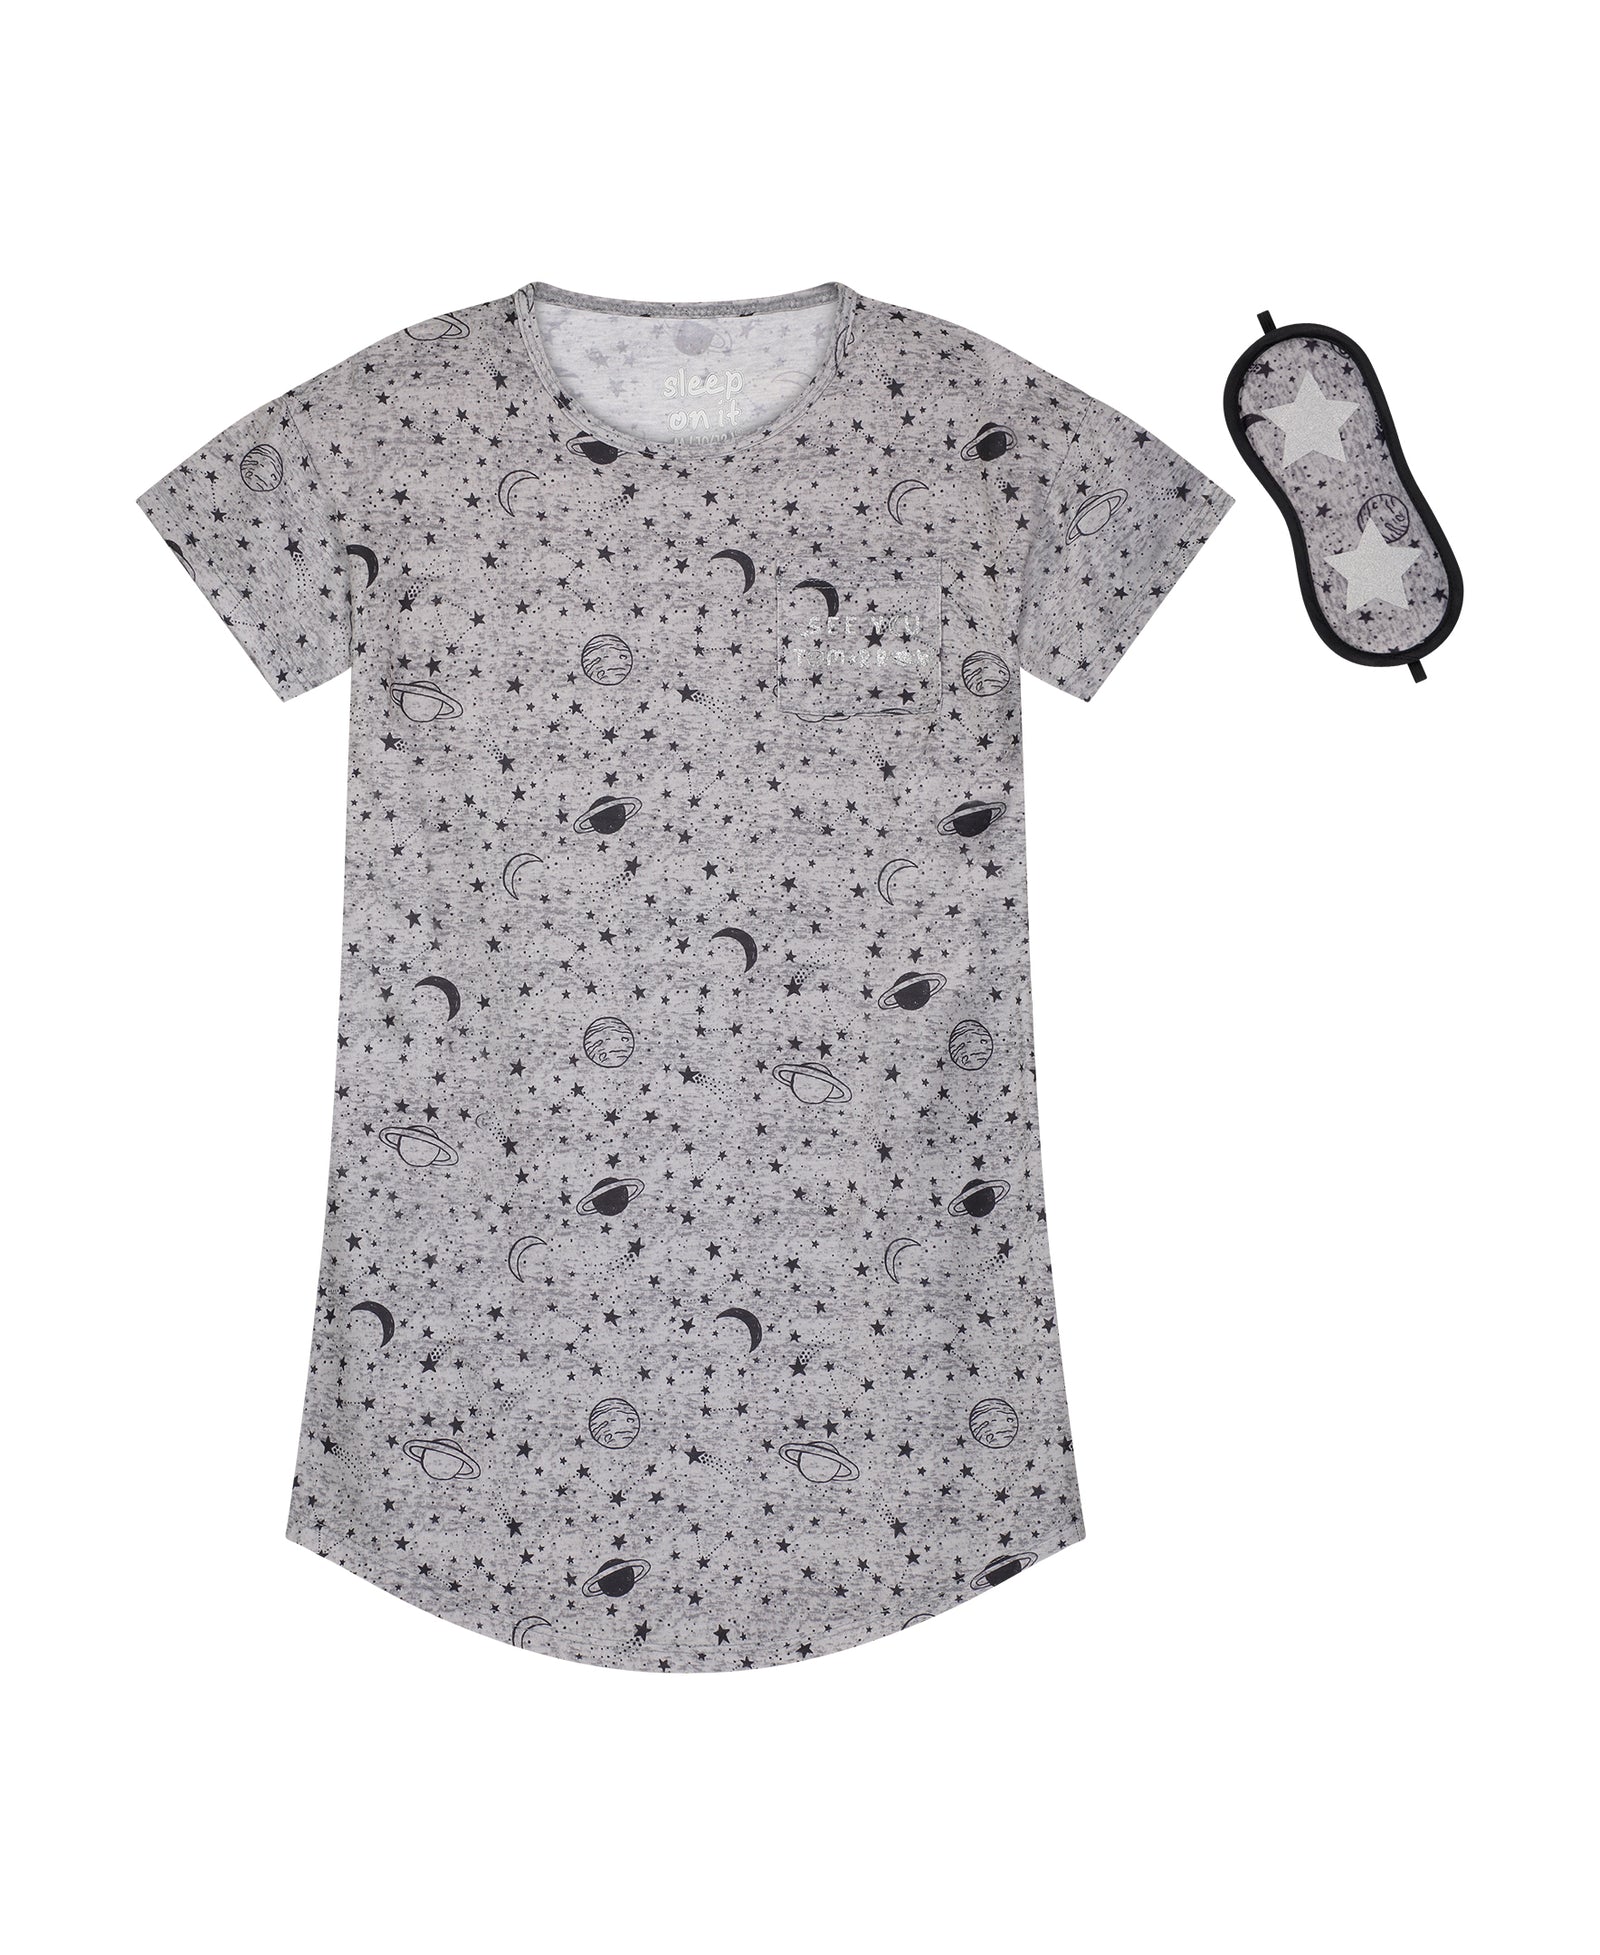 Kid's Silk Nightshirt Girls Fashion Sleep Shirt with Pocket White Pipi